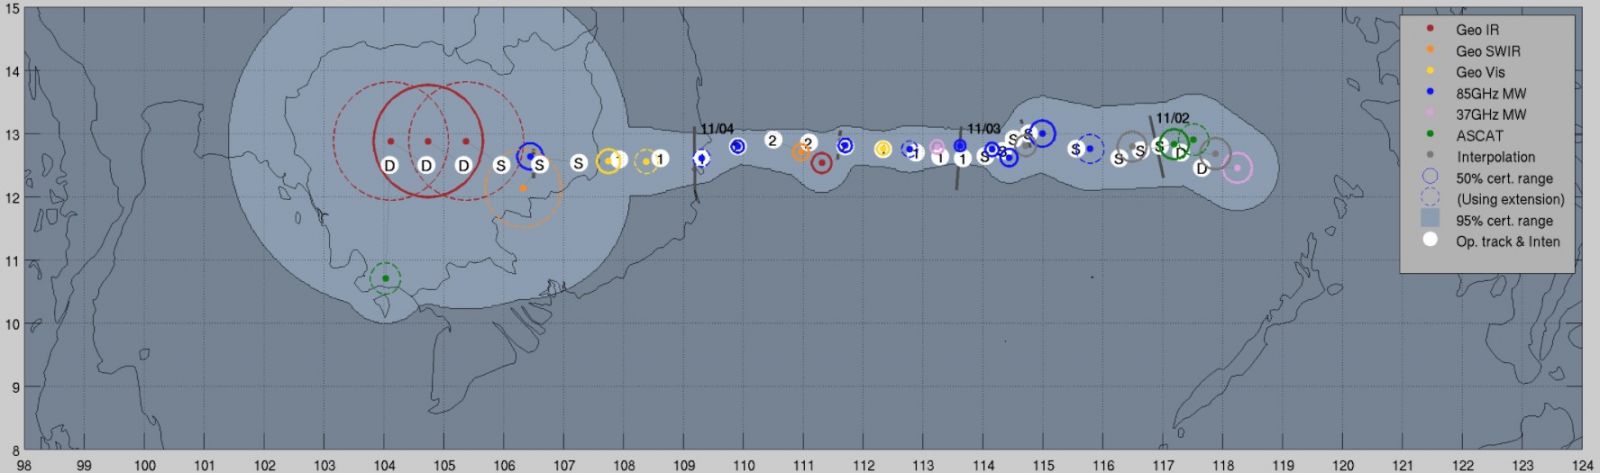 Typhoon Damrey full track